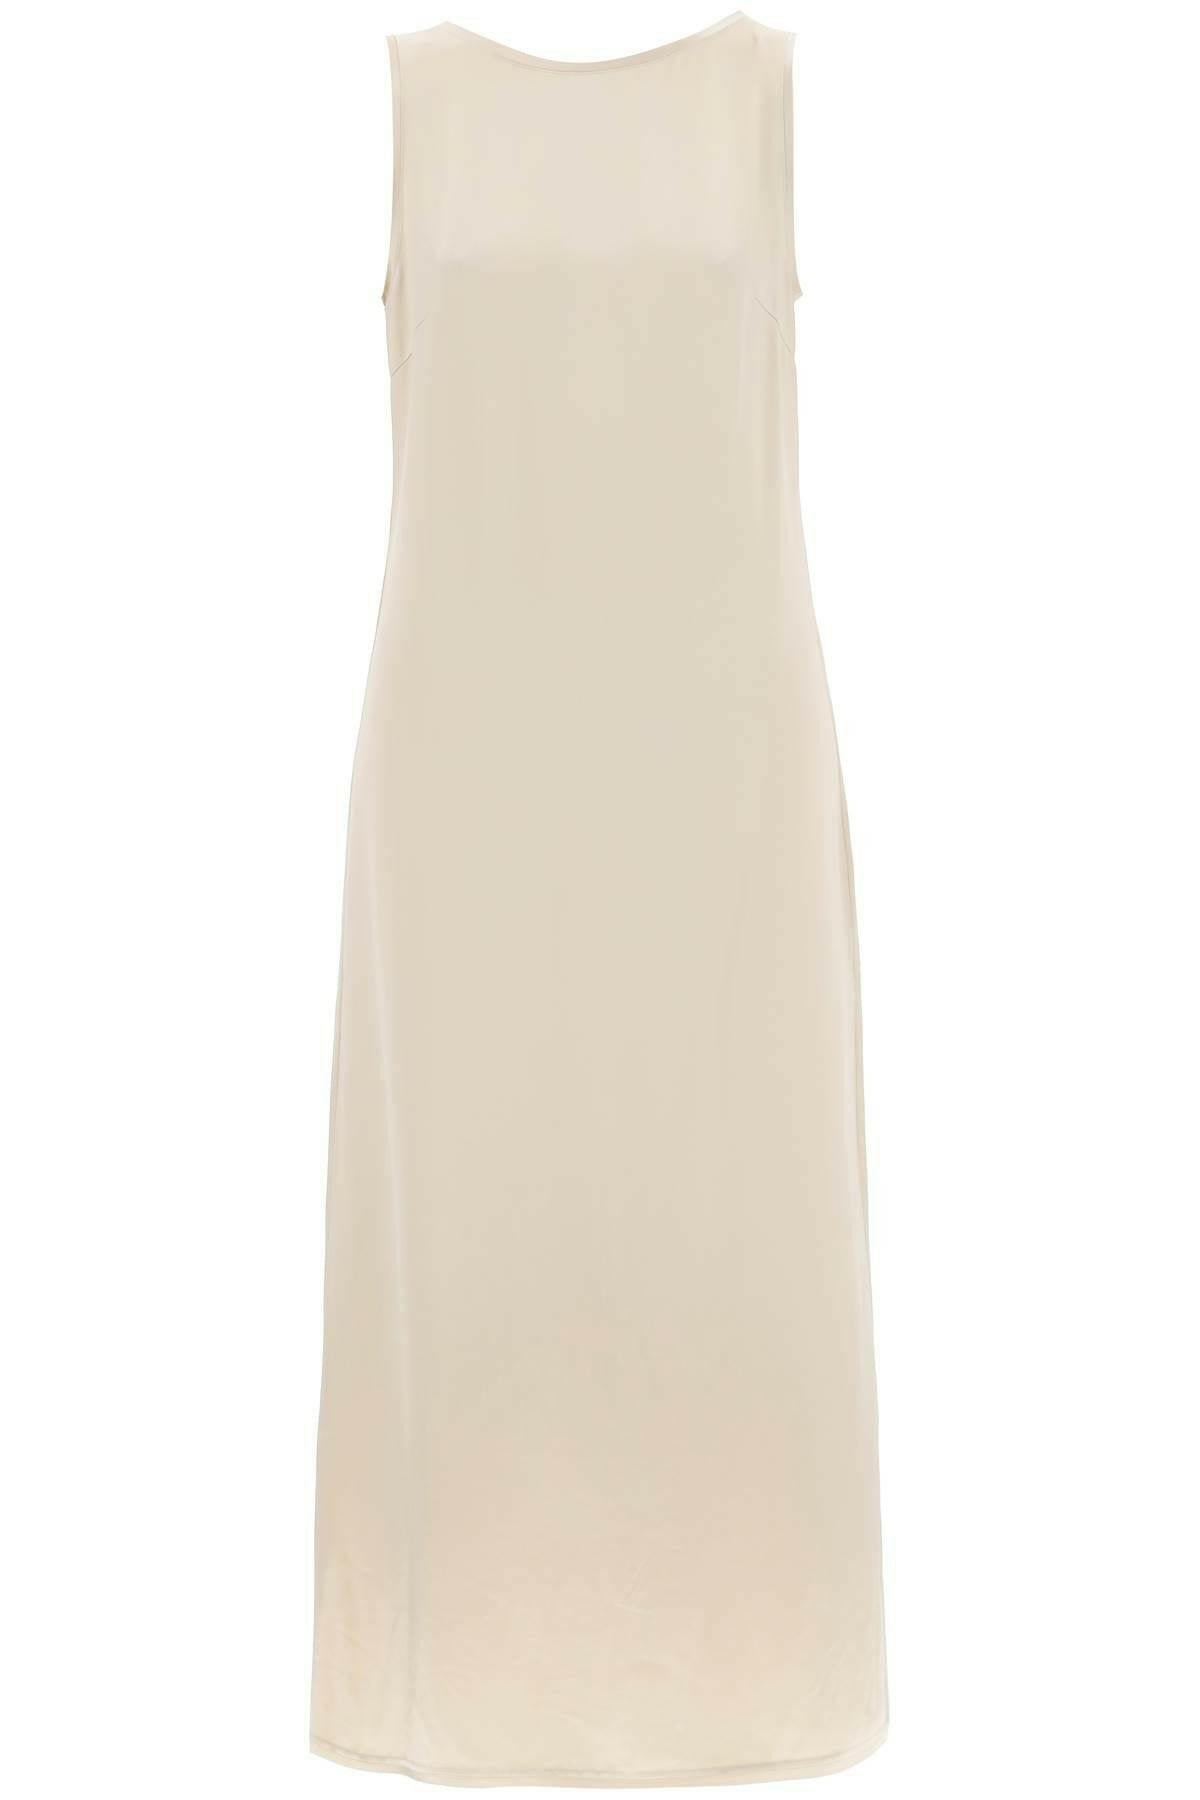 Oyster Gray Audette Eastman Naia™ Maxi Dress BY MALENE BIRGER JOHN JULIA.